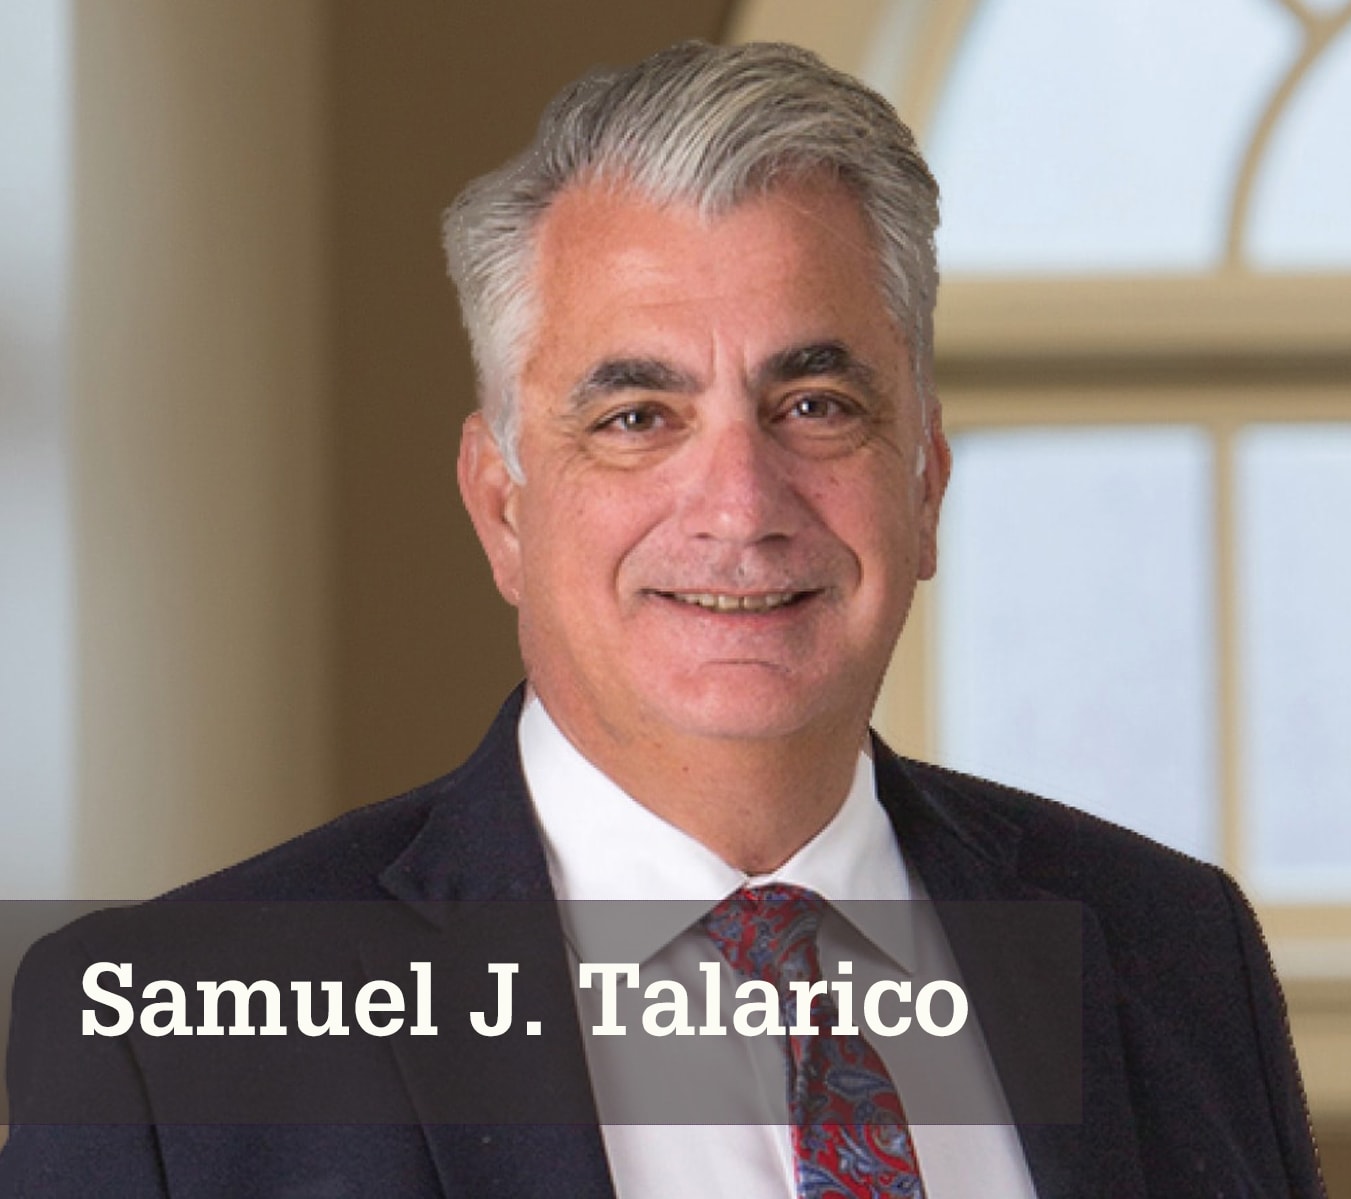 Samuel J. Talarico